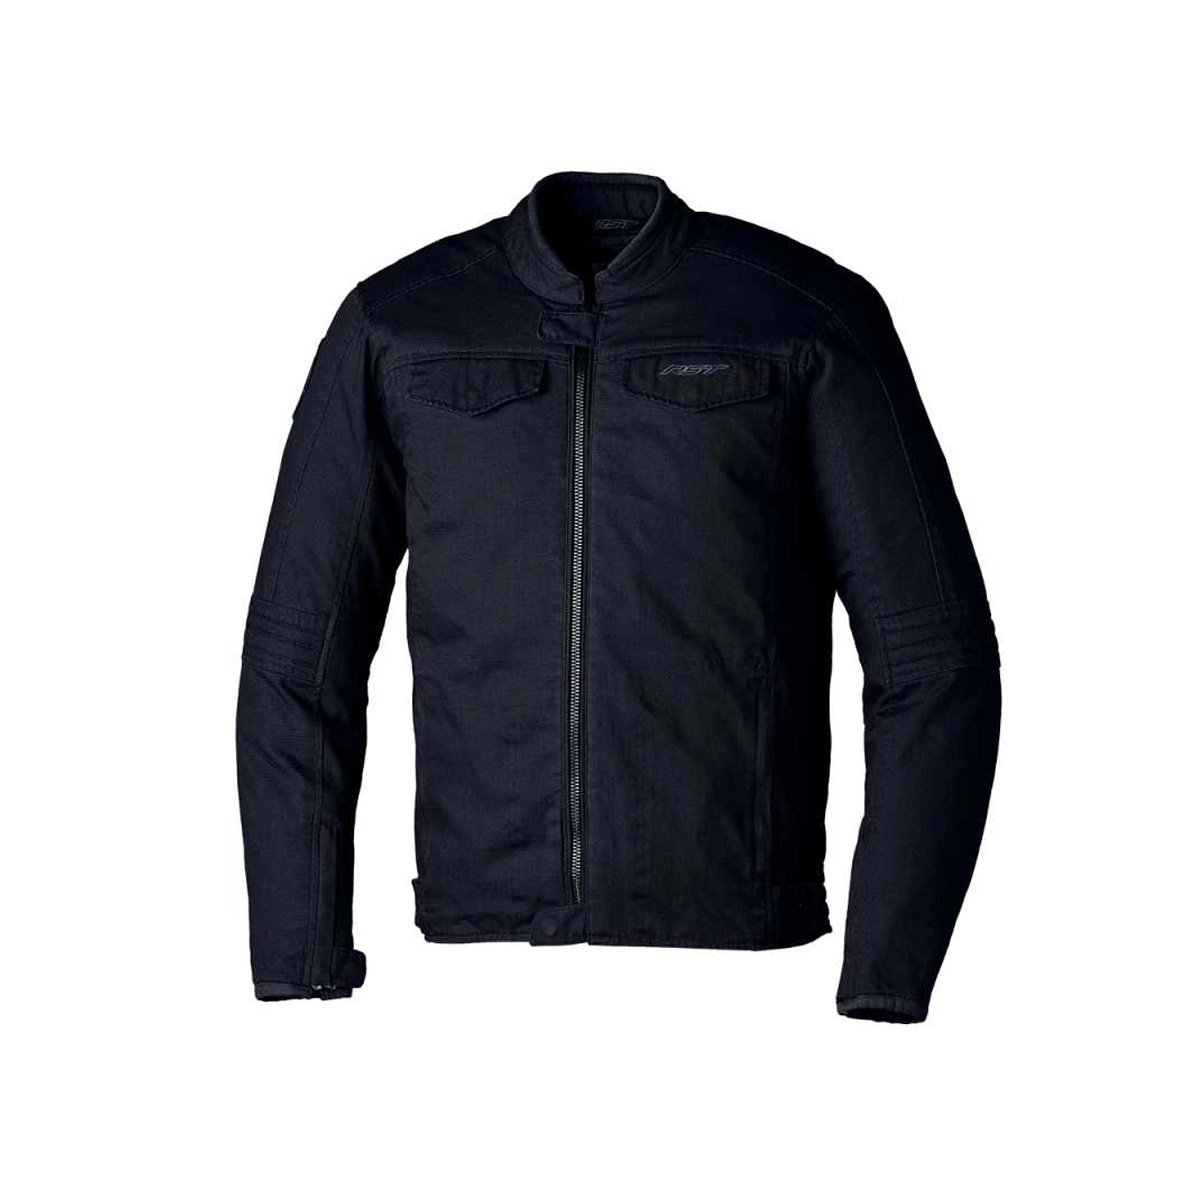 Image of RST IOM TT Crosby 2 CE Textile Jacket Men Black Talla 46